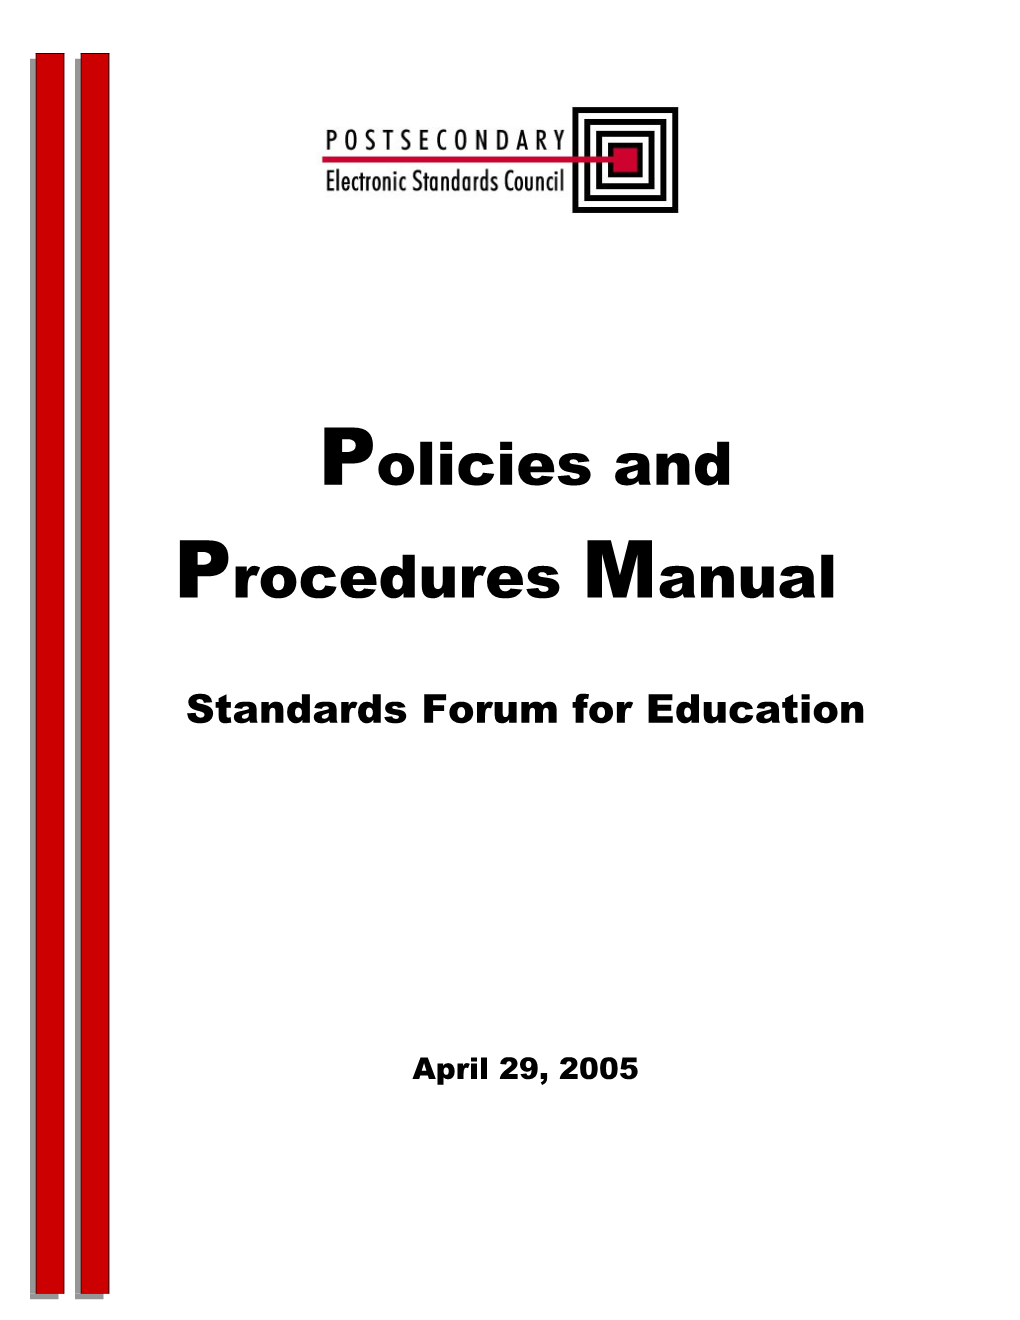 Policies and Procedures Manual s2